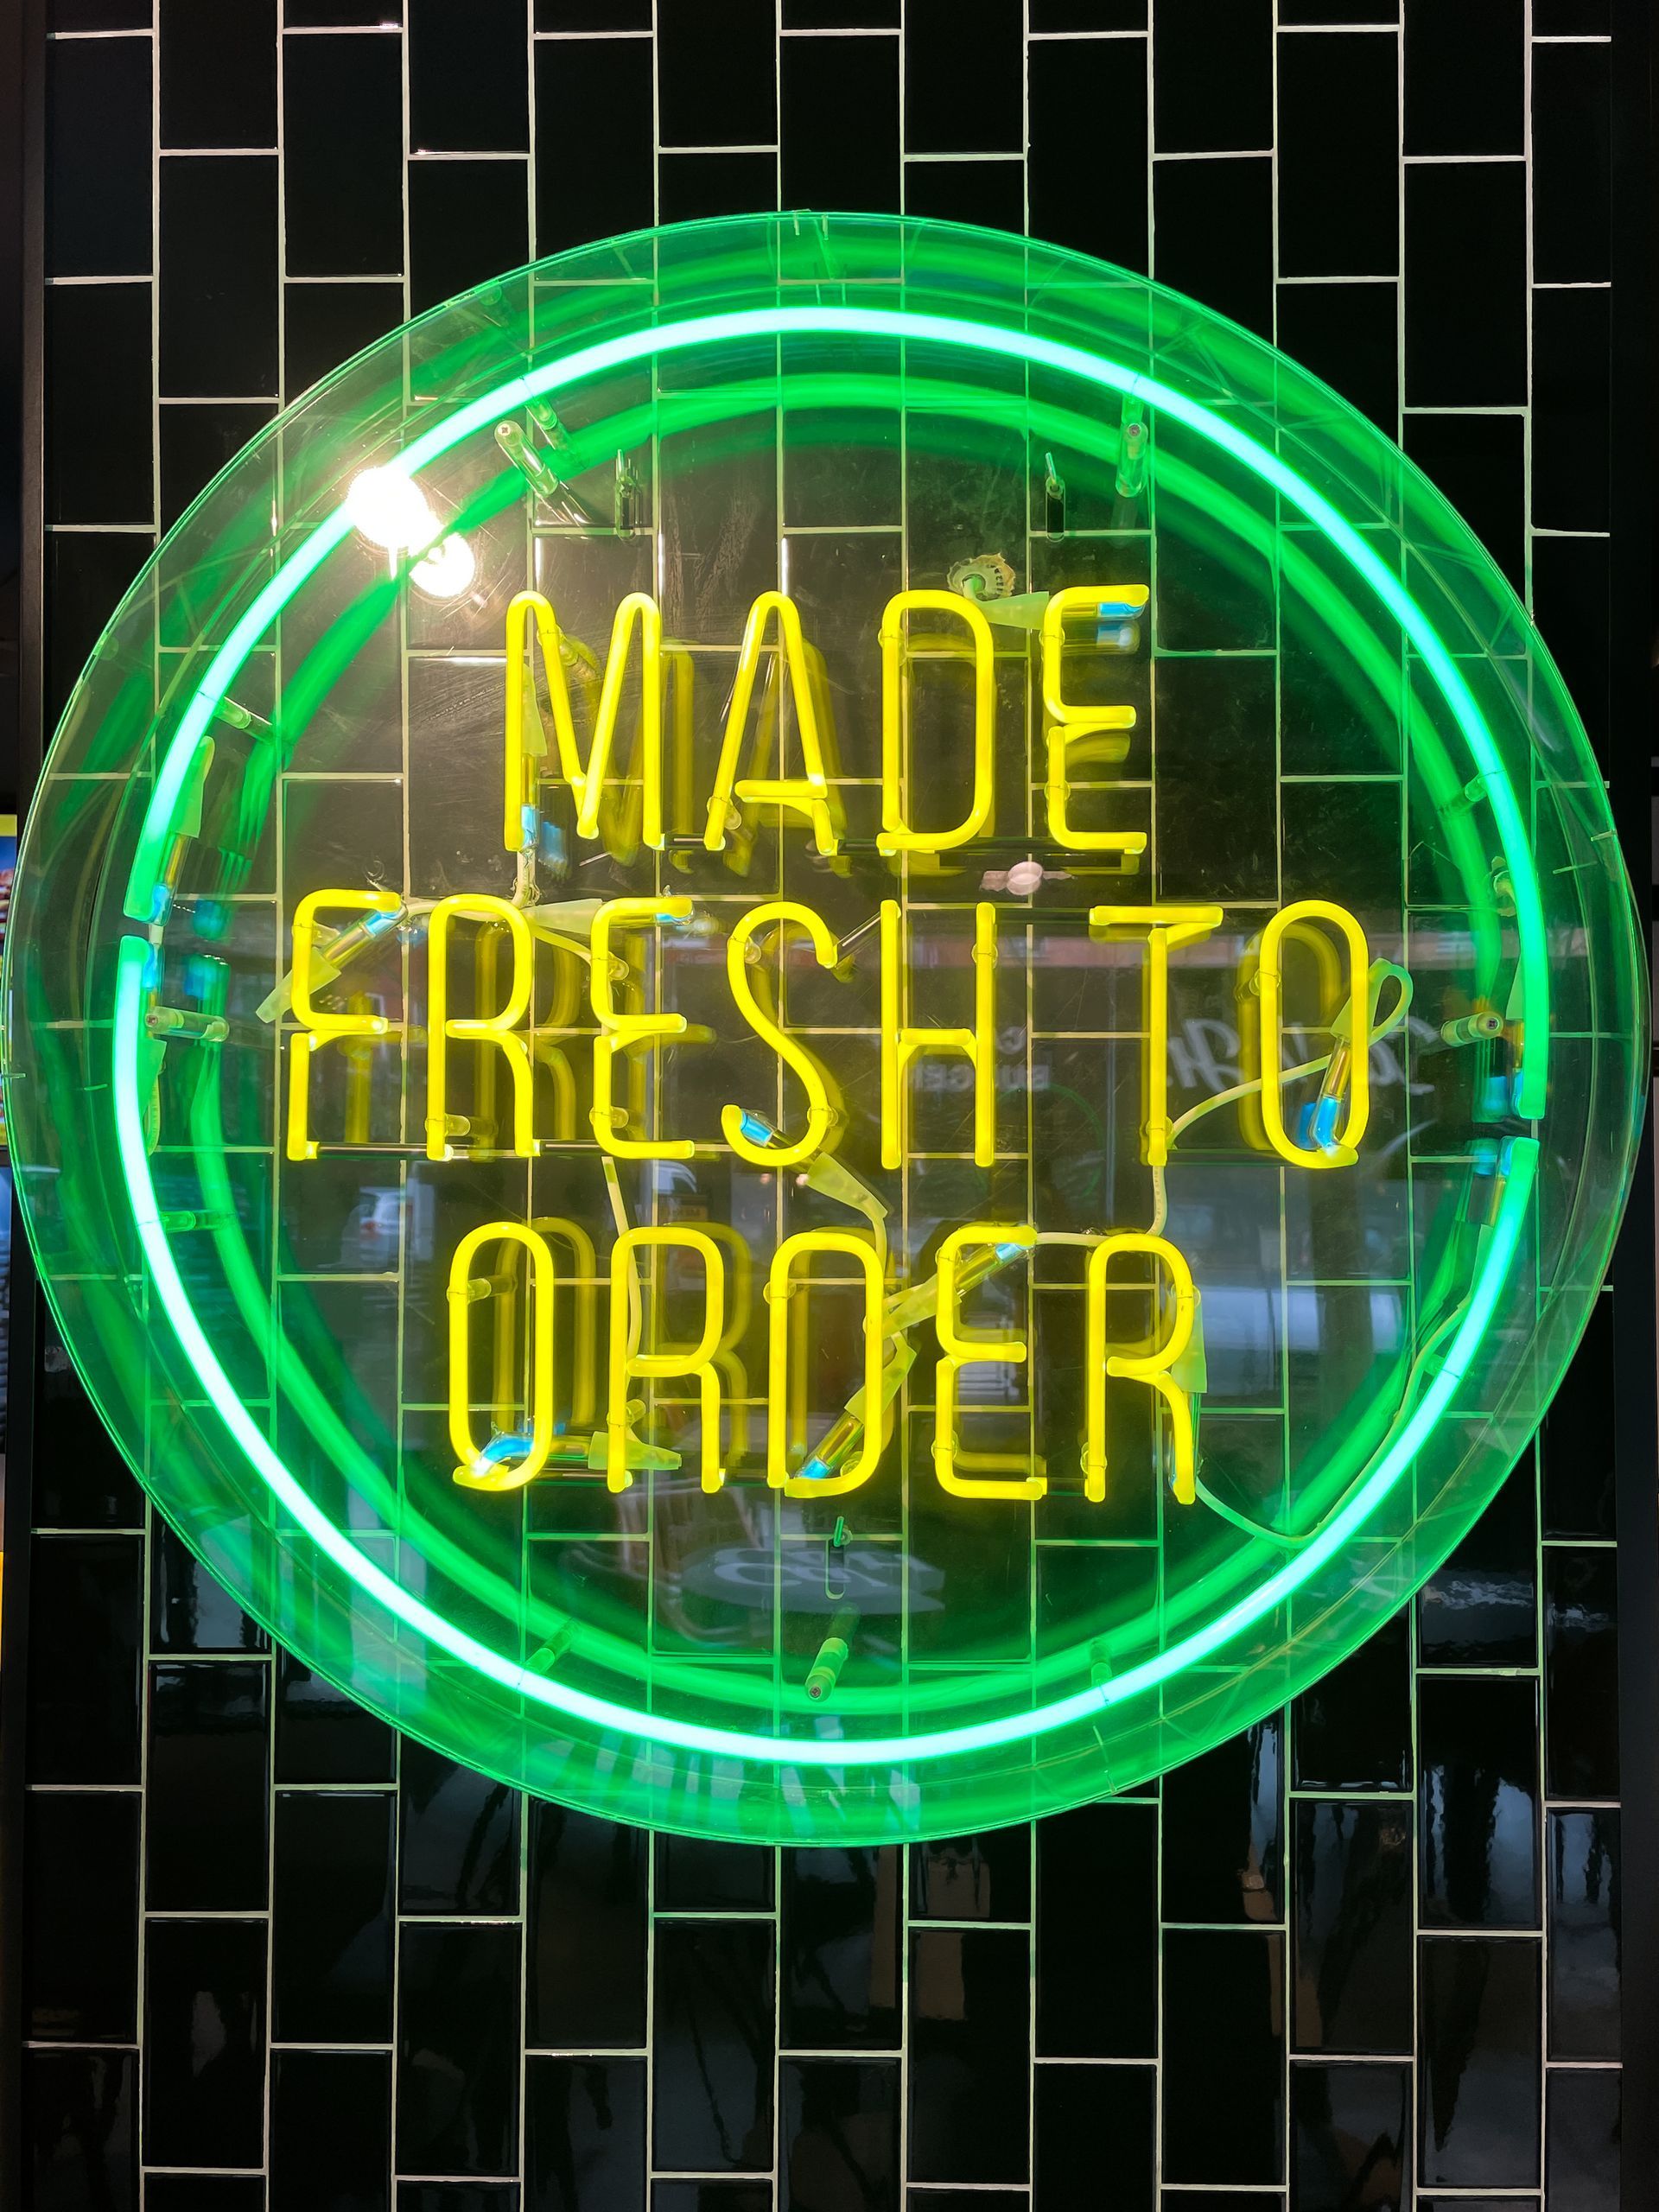 custom neon signs